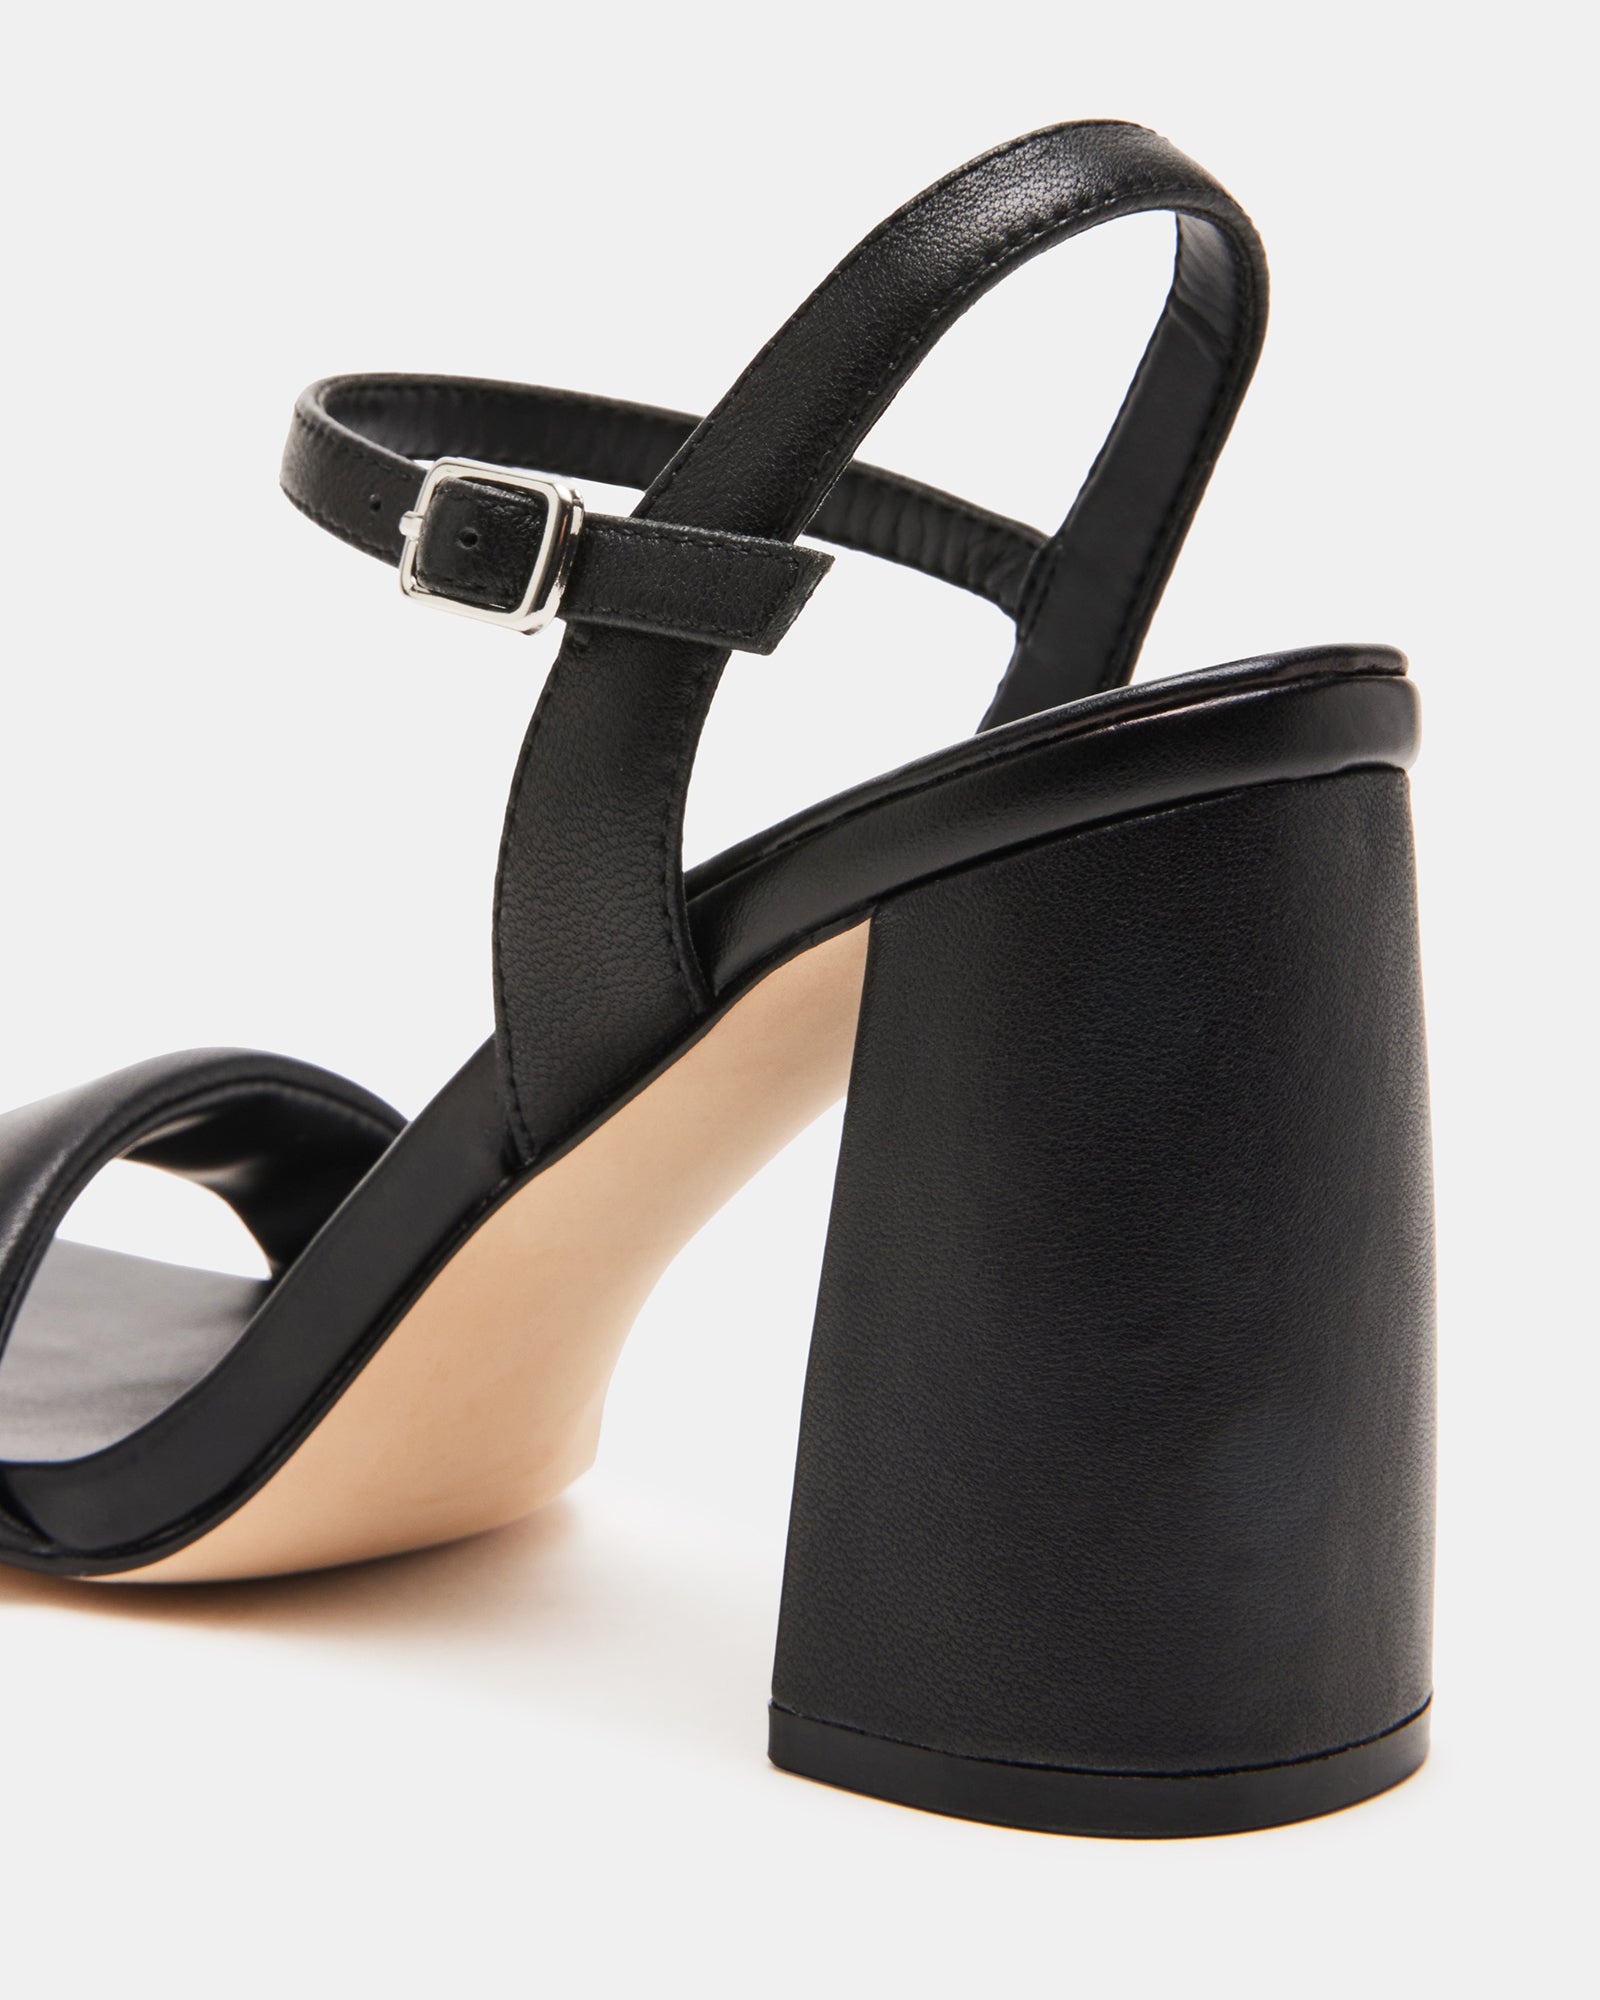 MAREENA Black Leather Square Toe Block Heel | Women's Heels – Steve Madden